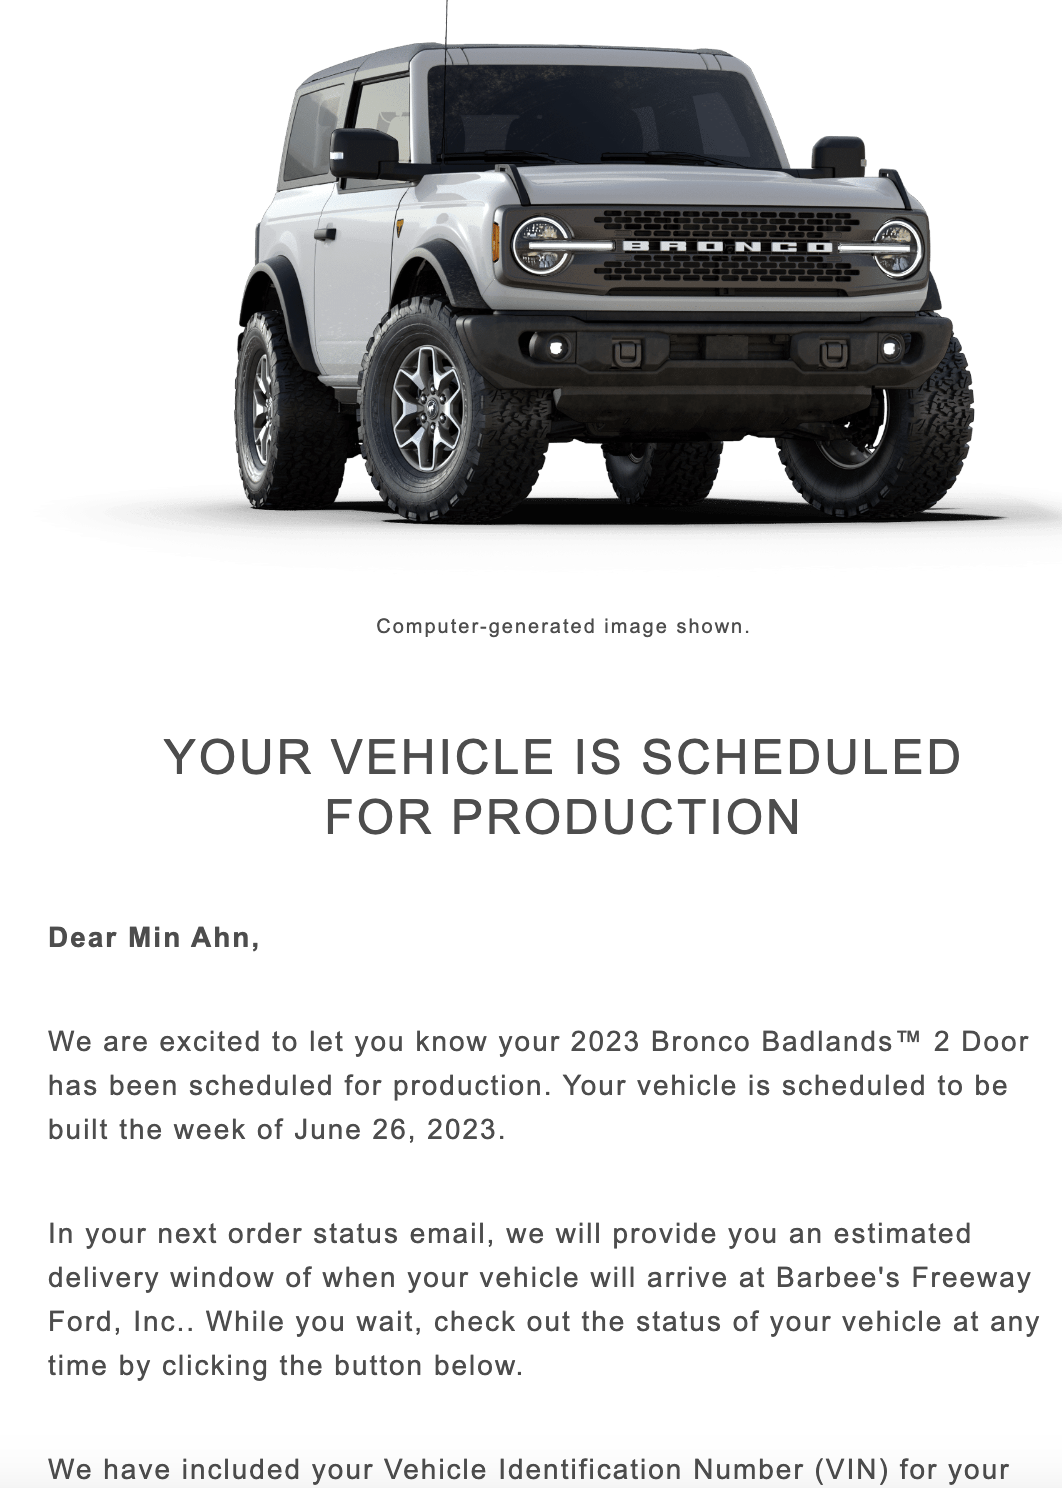 Ford Bronco 6/26/2023 (or 6/27/2023) Build Week Screenshot 2023-05-12 at 10.22.14 AM